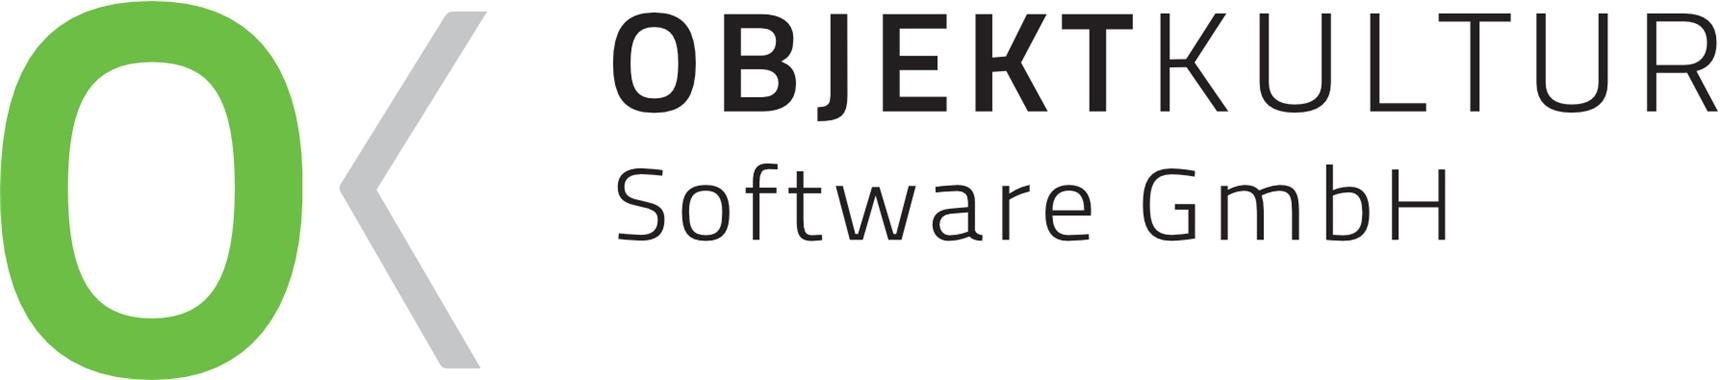 Objektkultur Software GmbH 